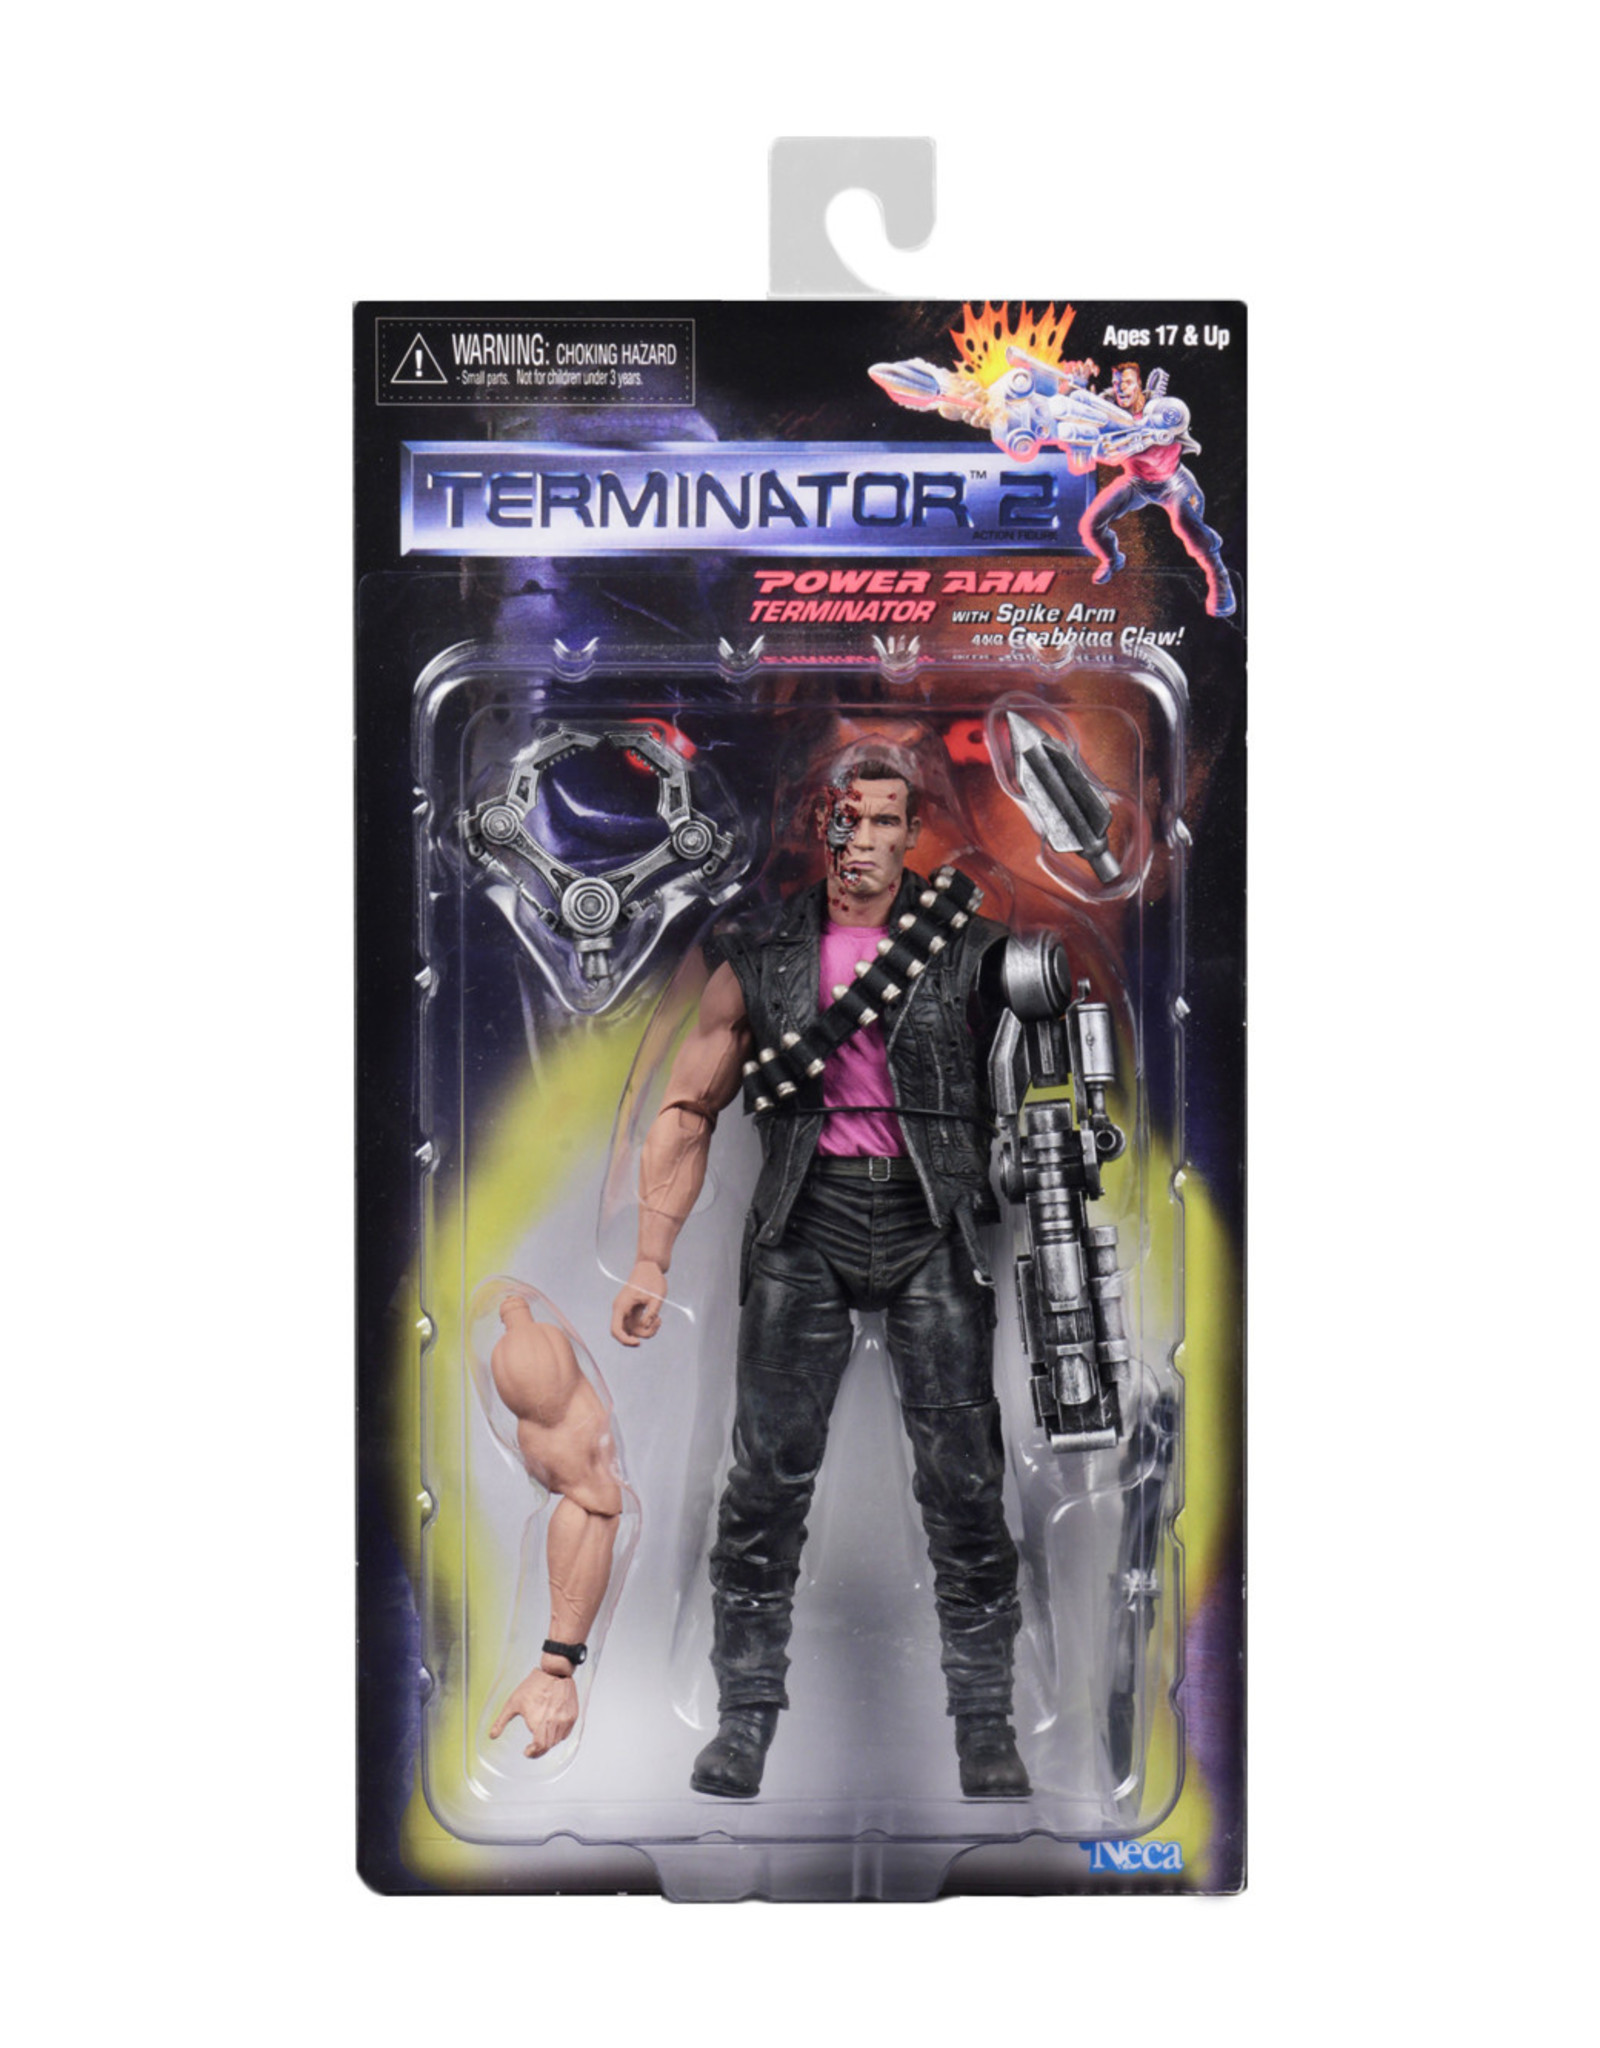 power arm terminator